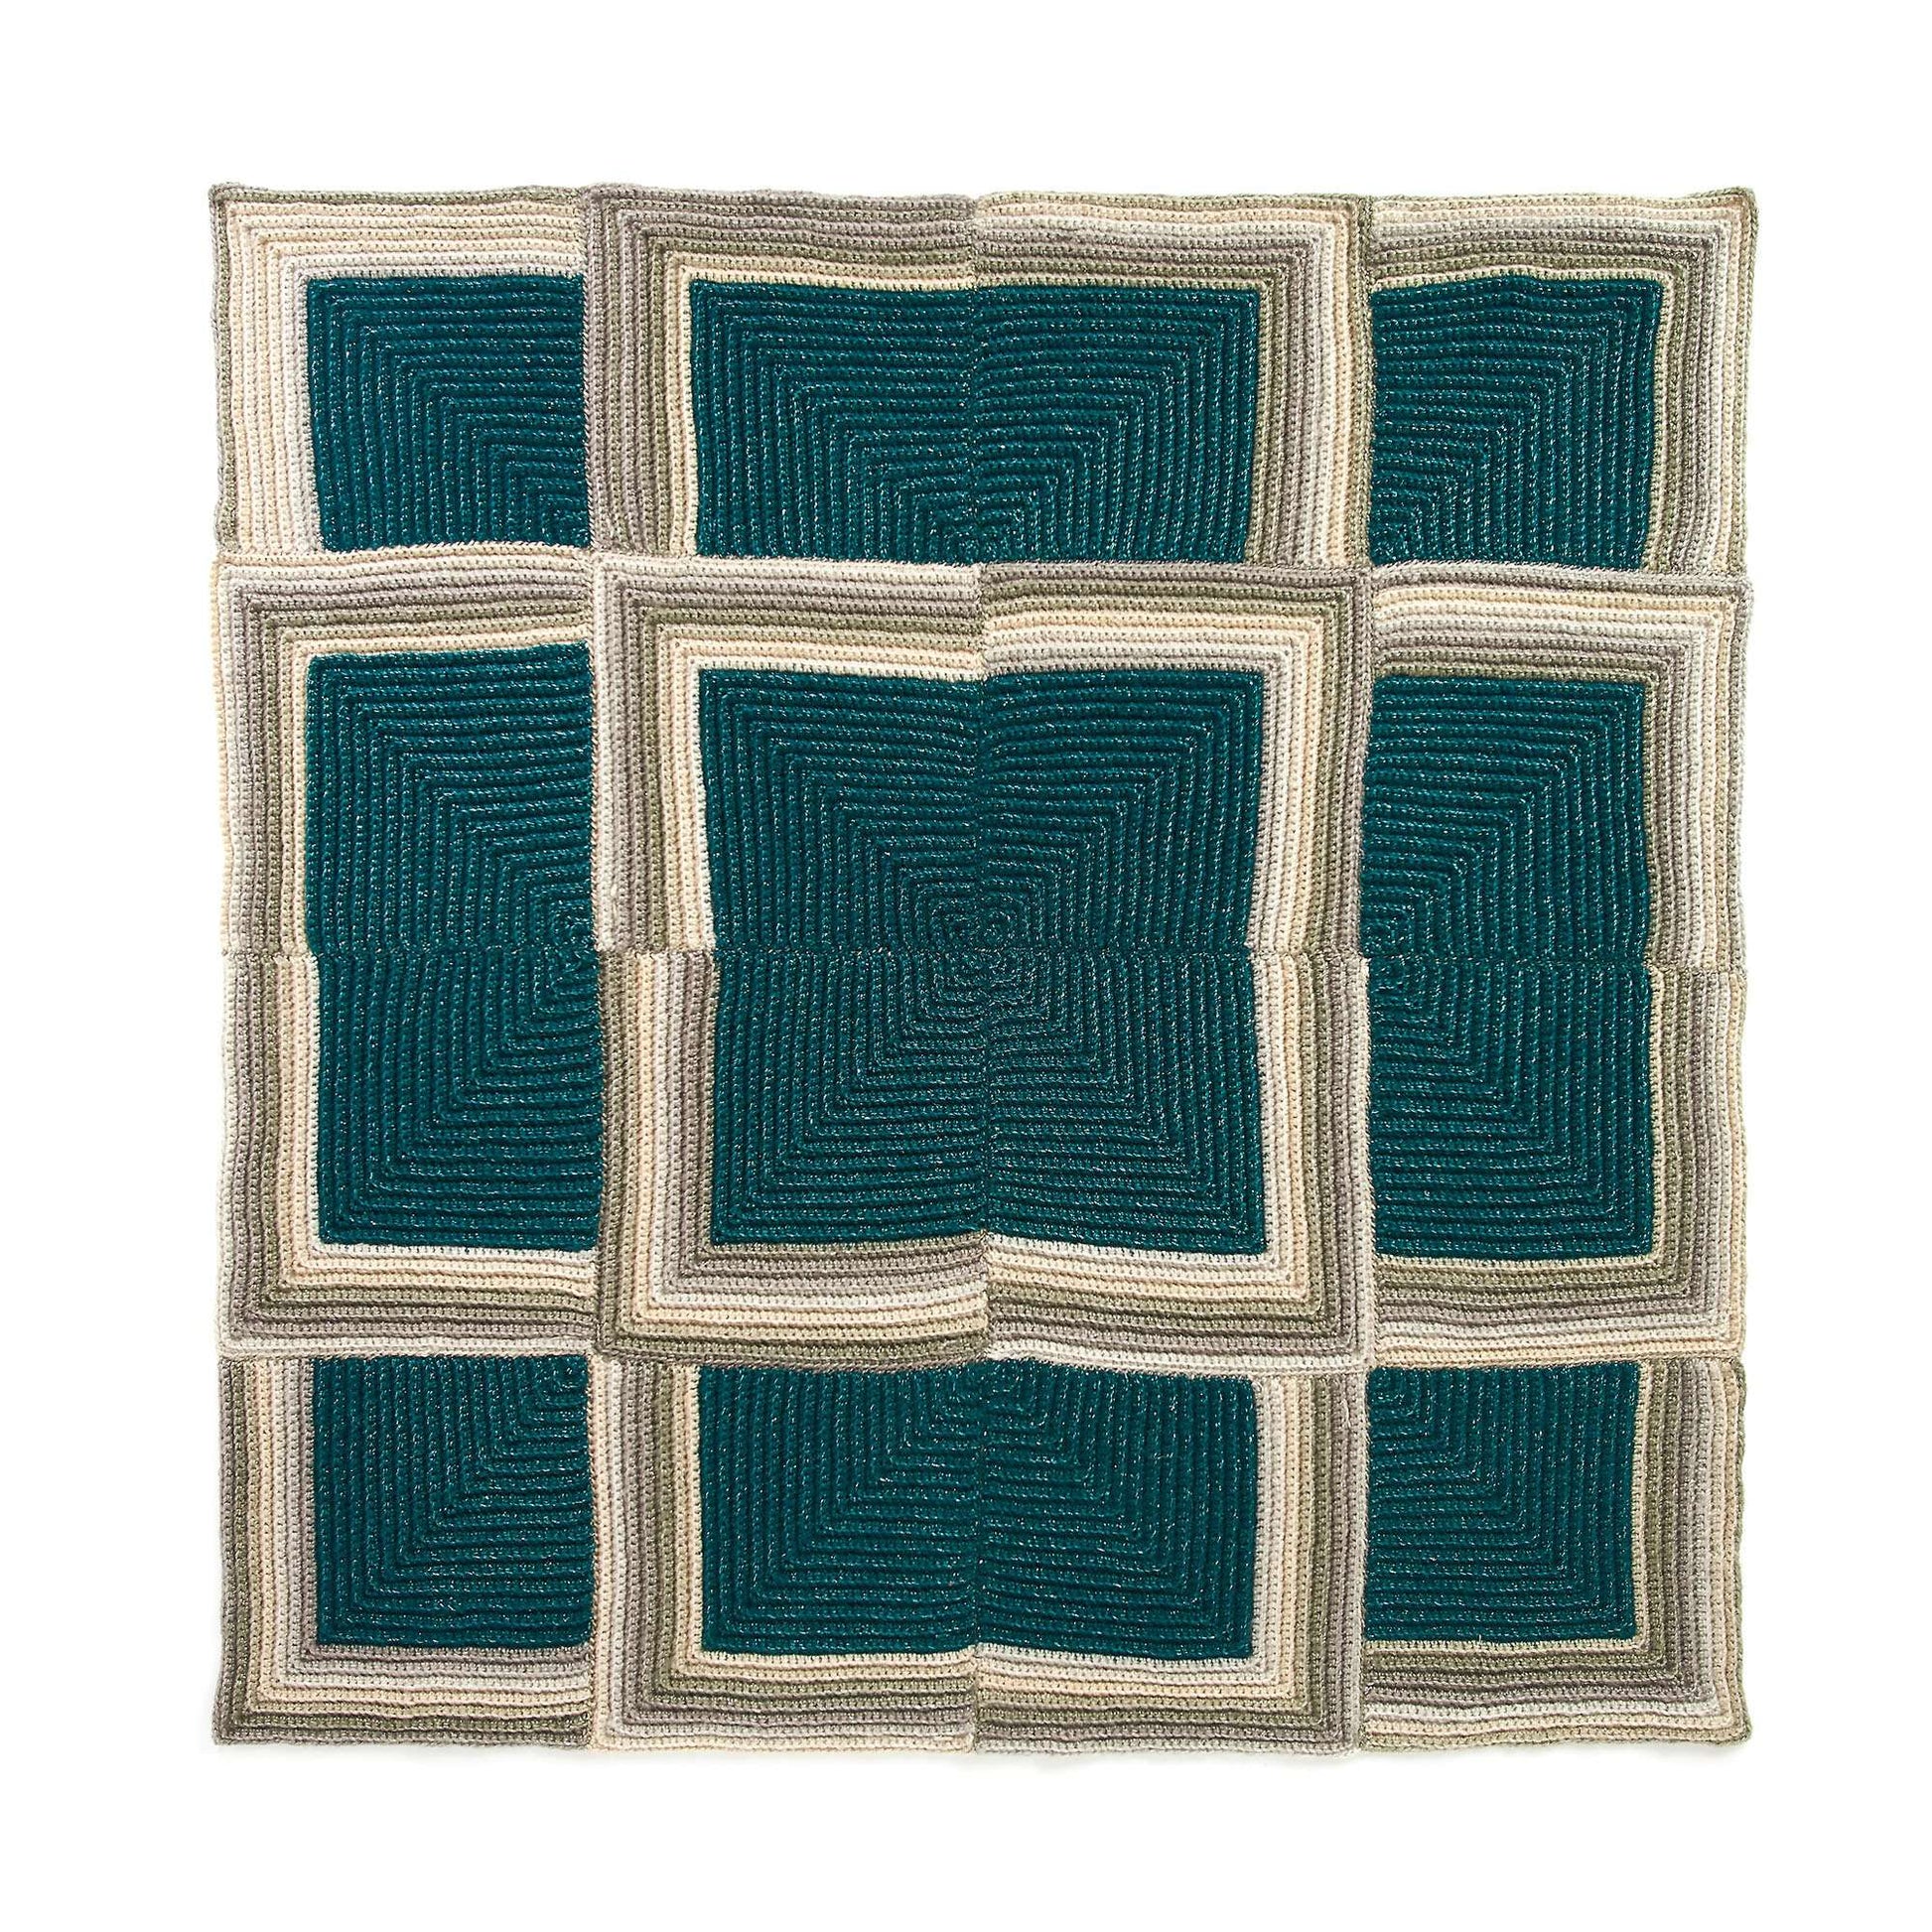 Free Caron Mitered Squares Crochet Afghan Pattern